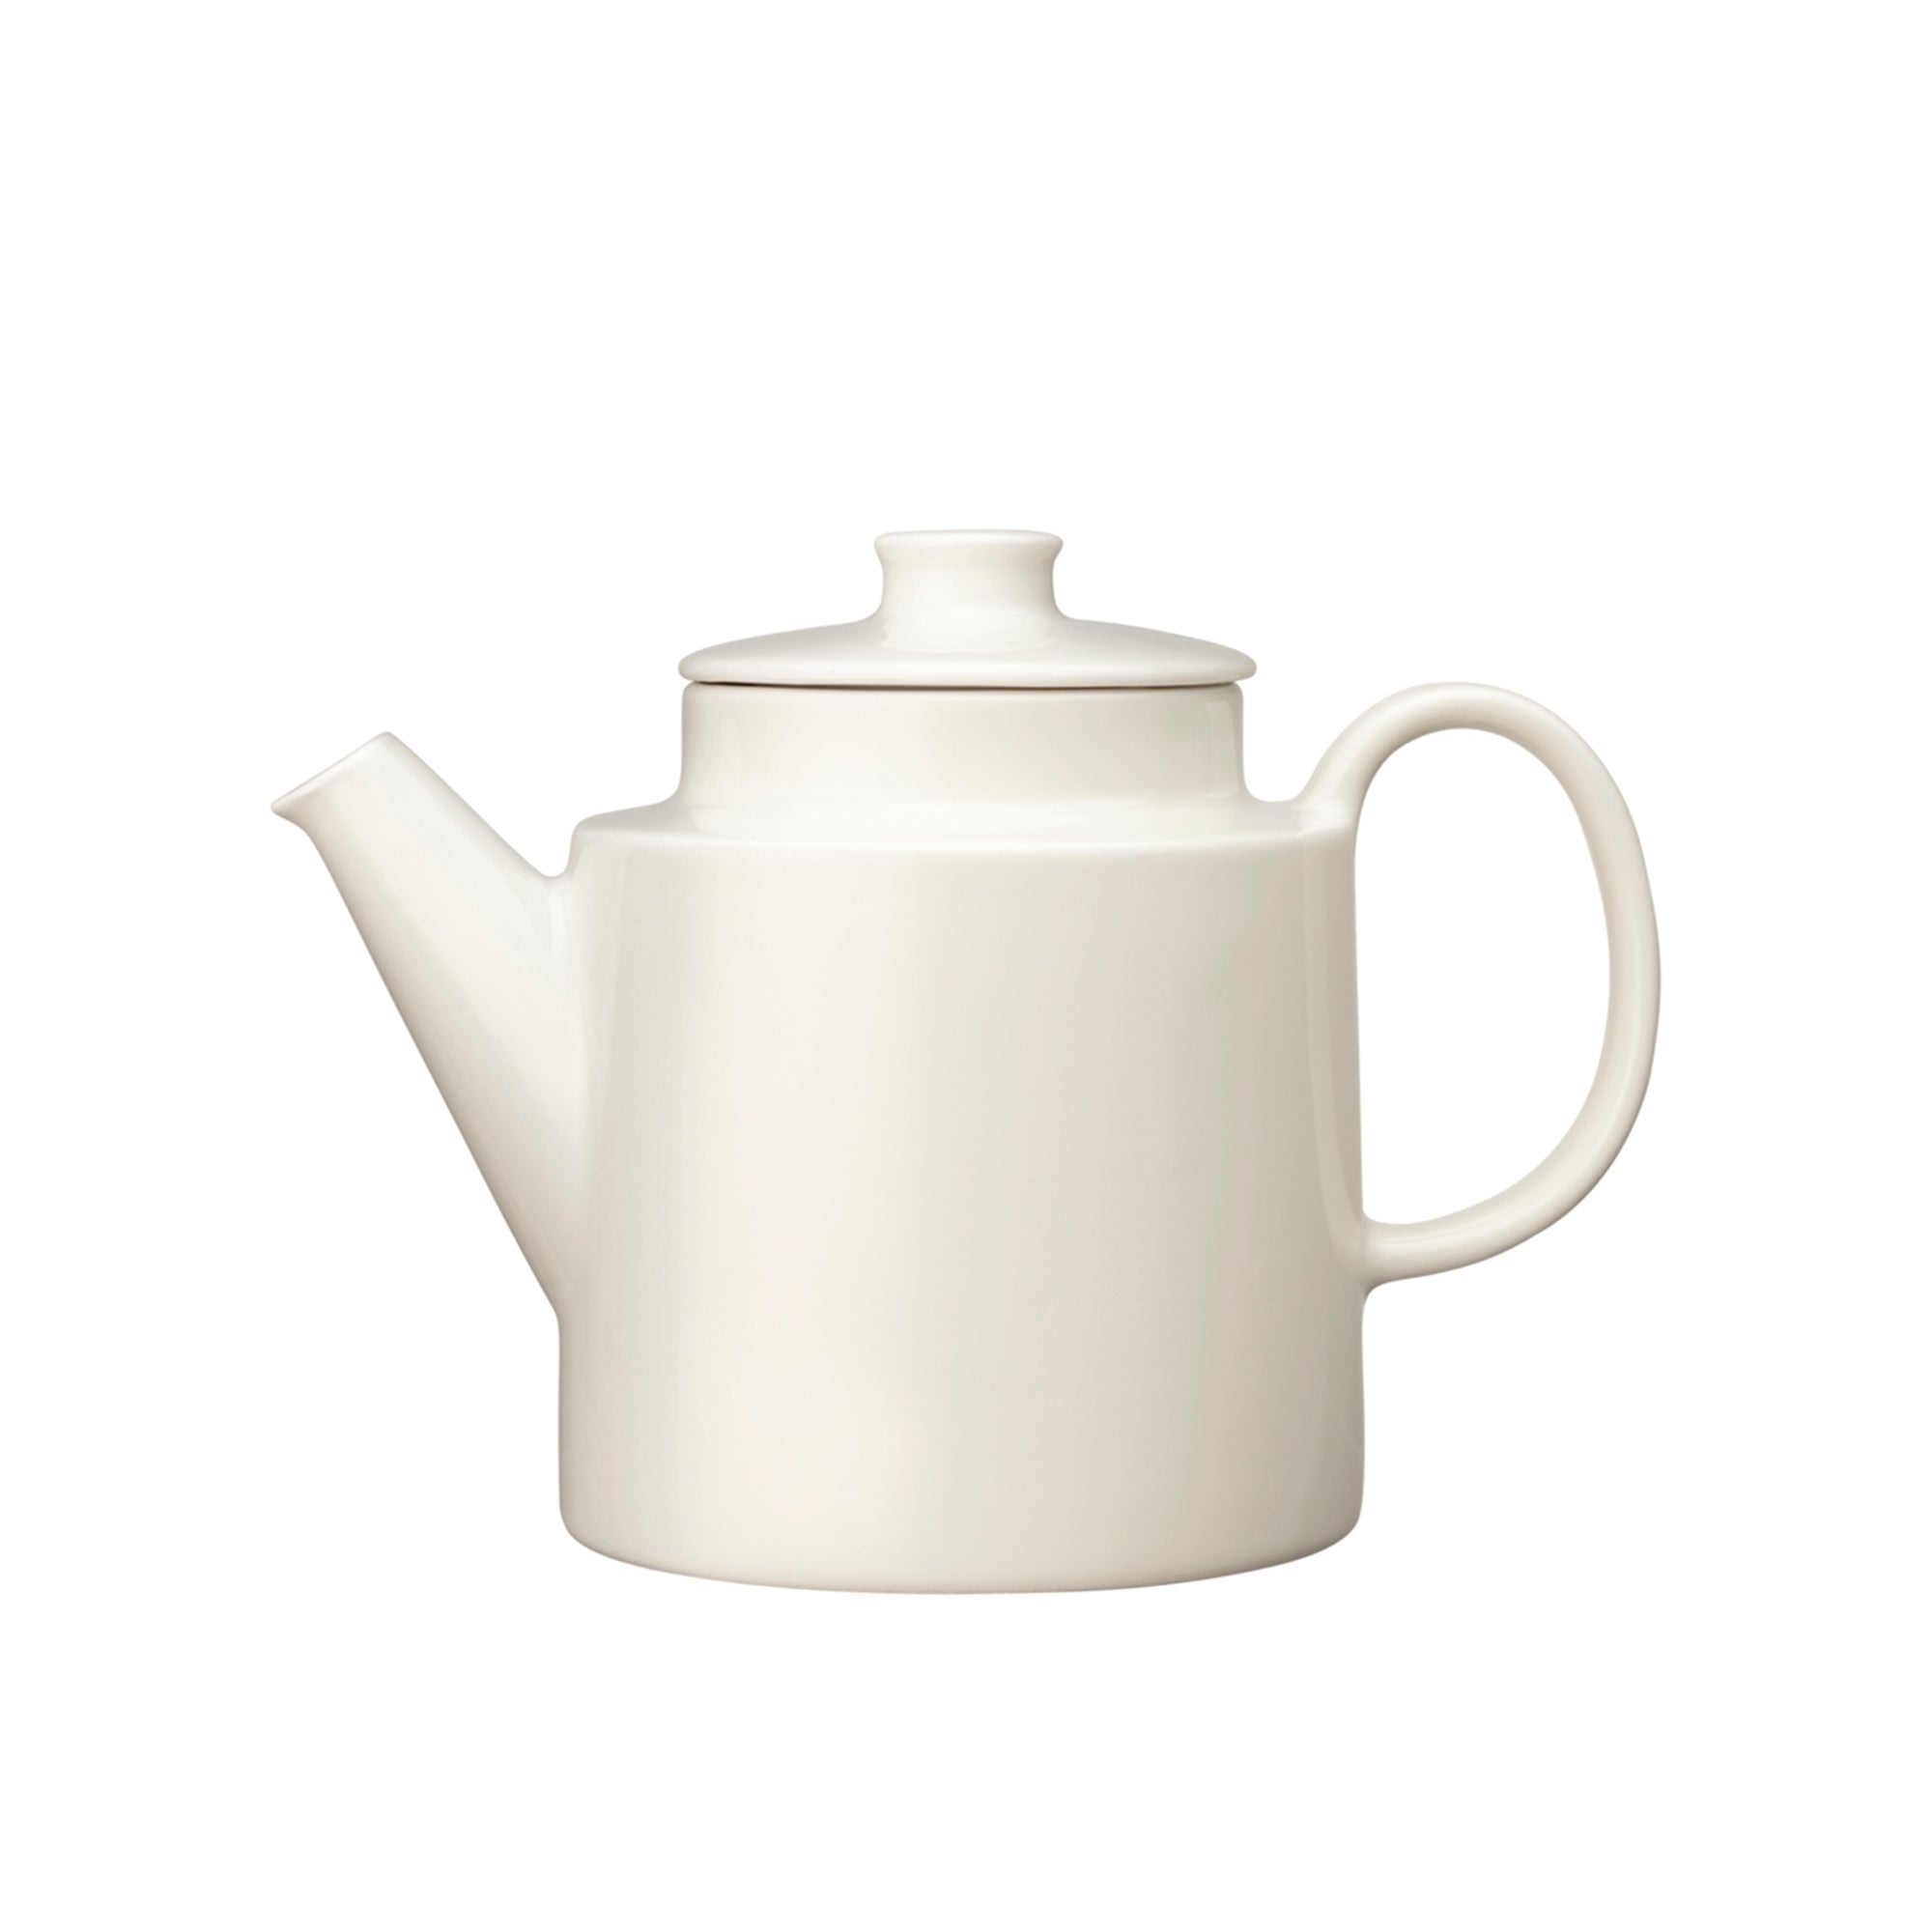 Teema White Tea Pot, 1L